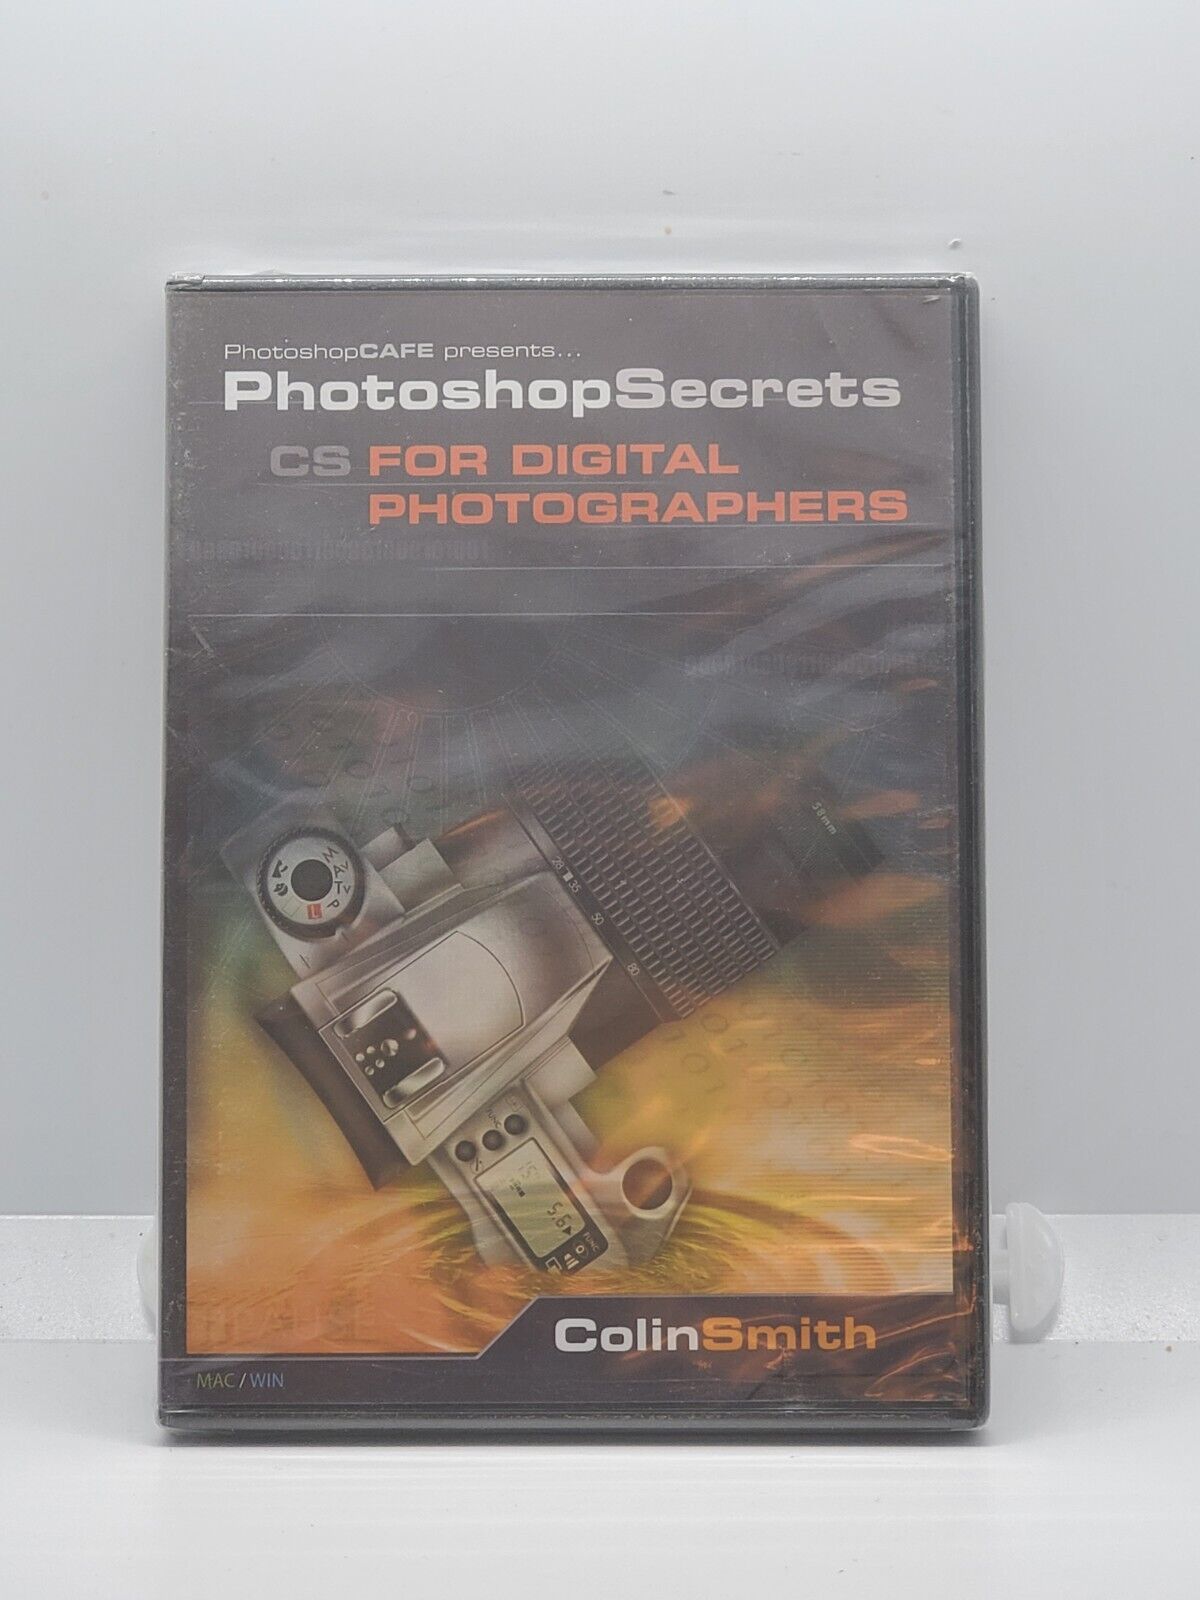  PhotoshopSecrets for Digital Photographers Cd Rom New